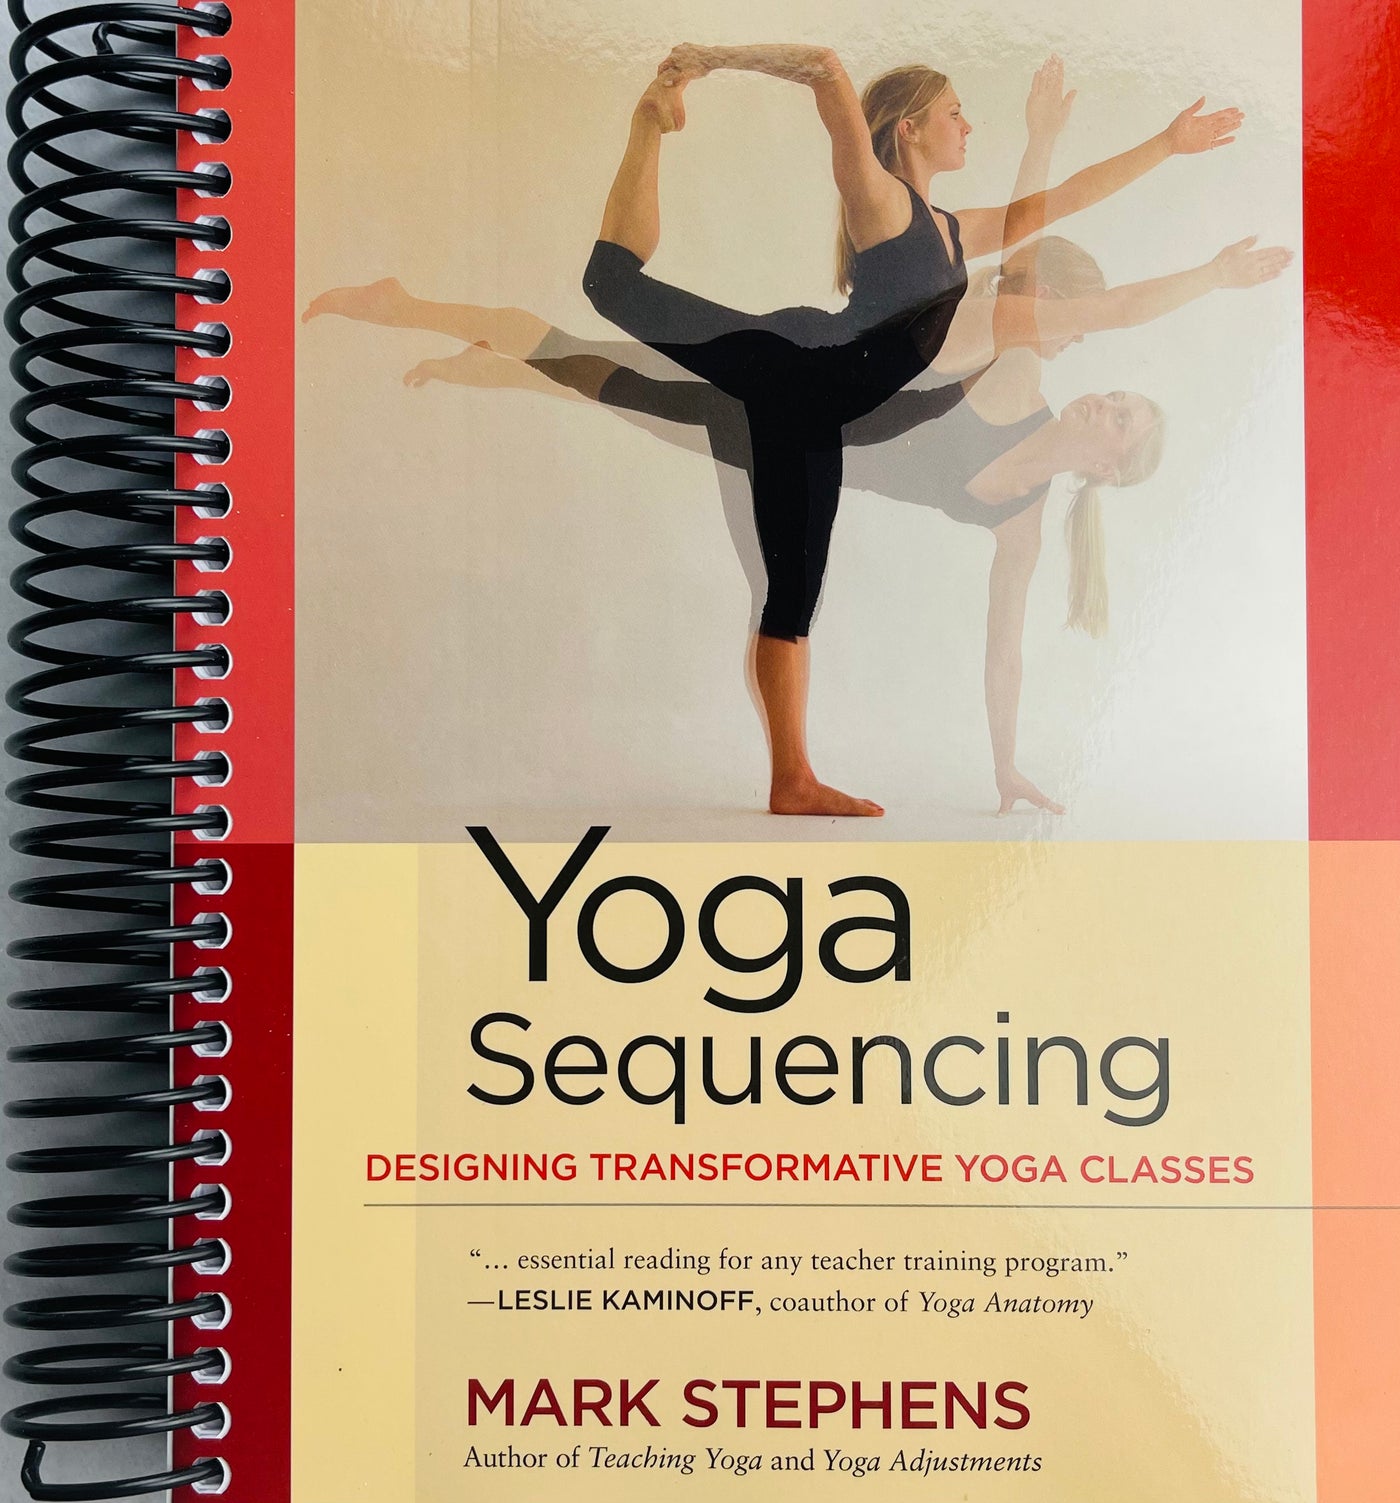 Yoga Sequencing - Designing Transformative Yoga Classes (Paperback)